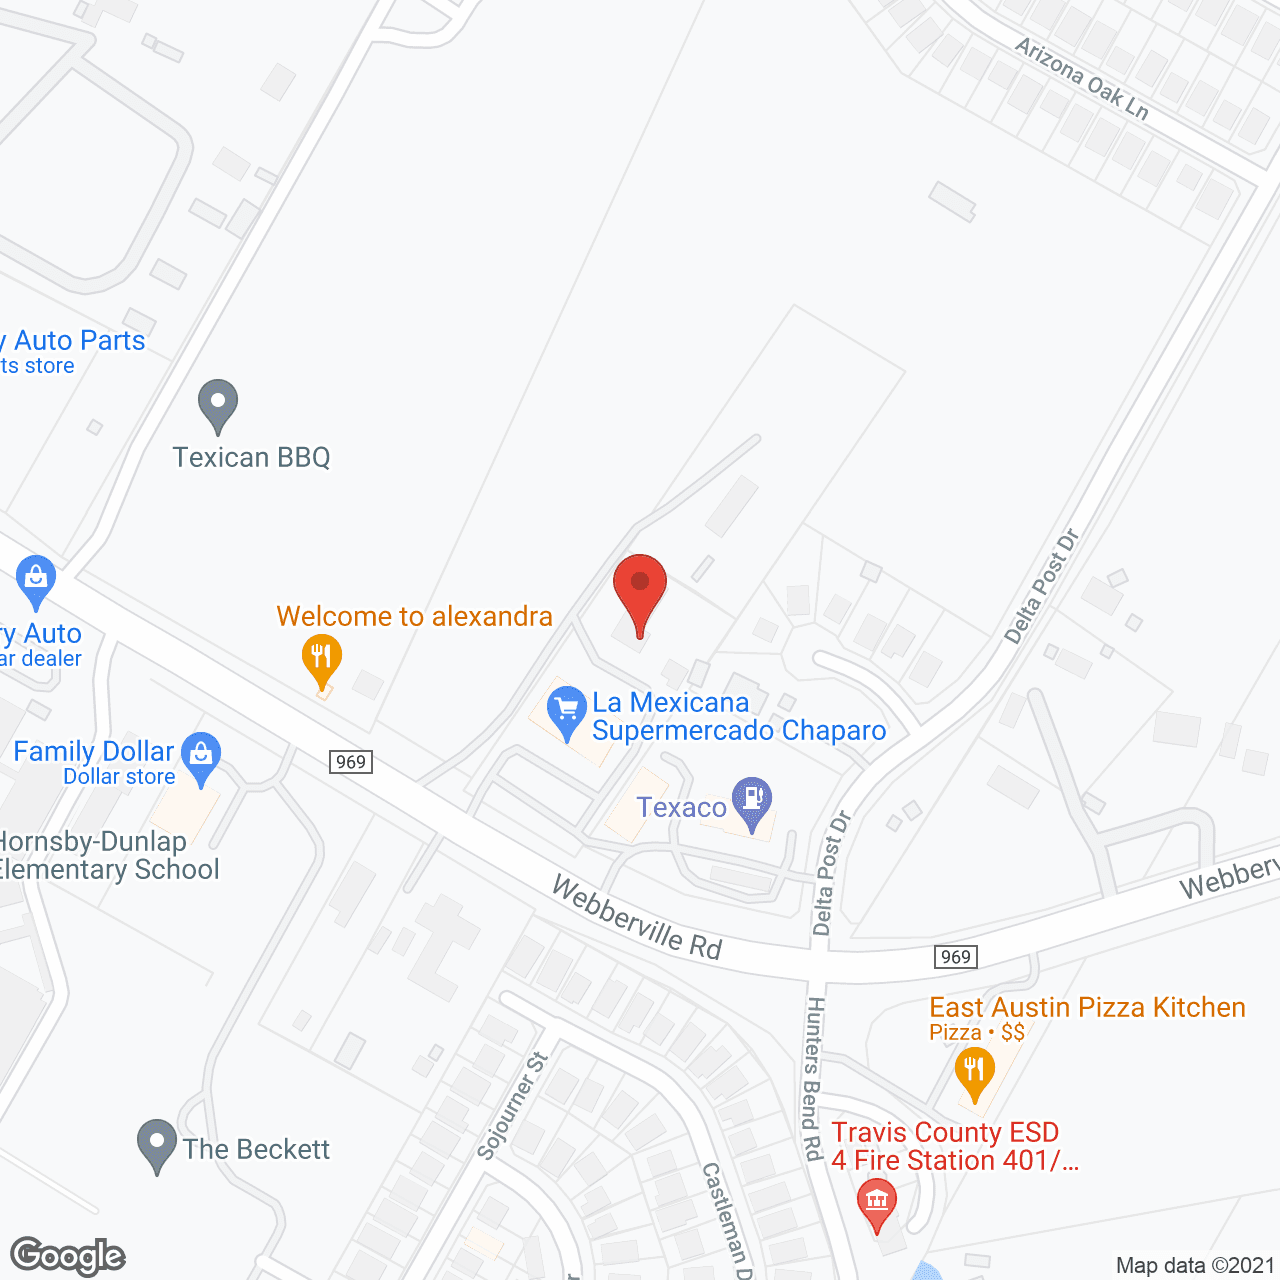 Shangri-La Care Home in google map